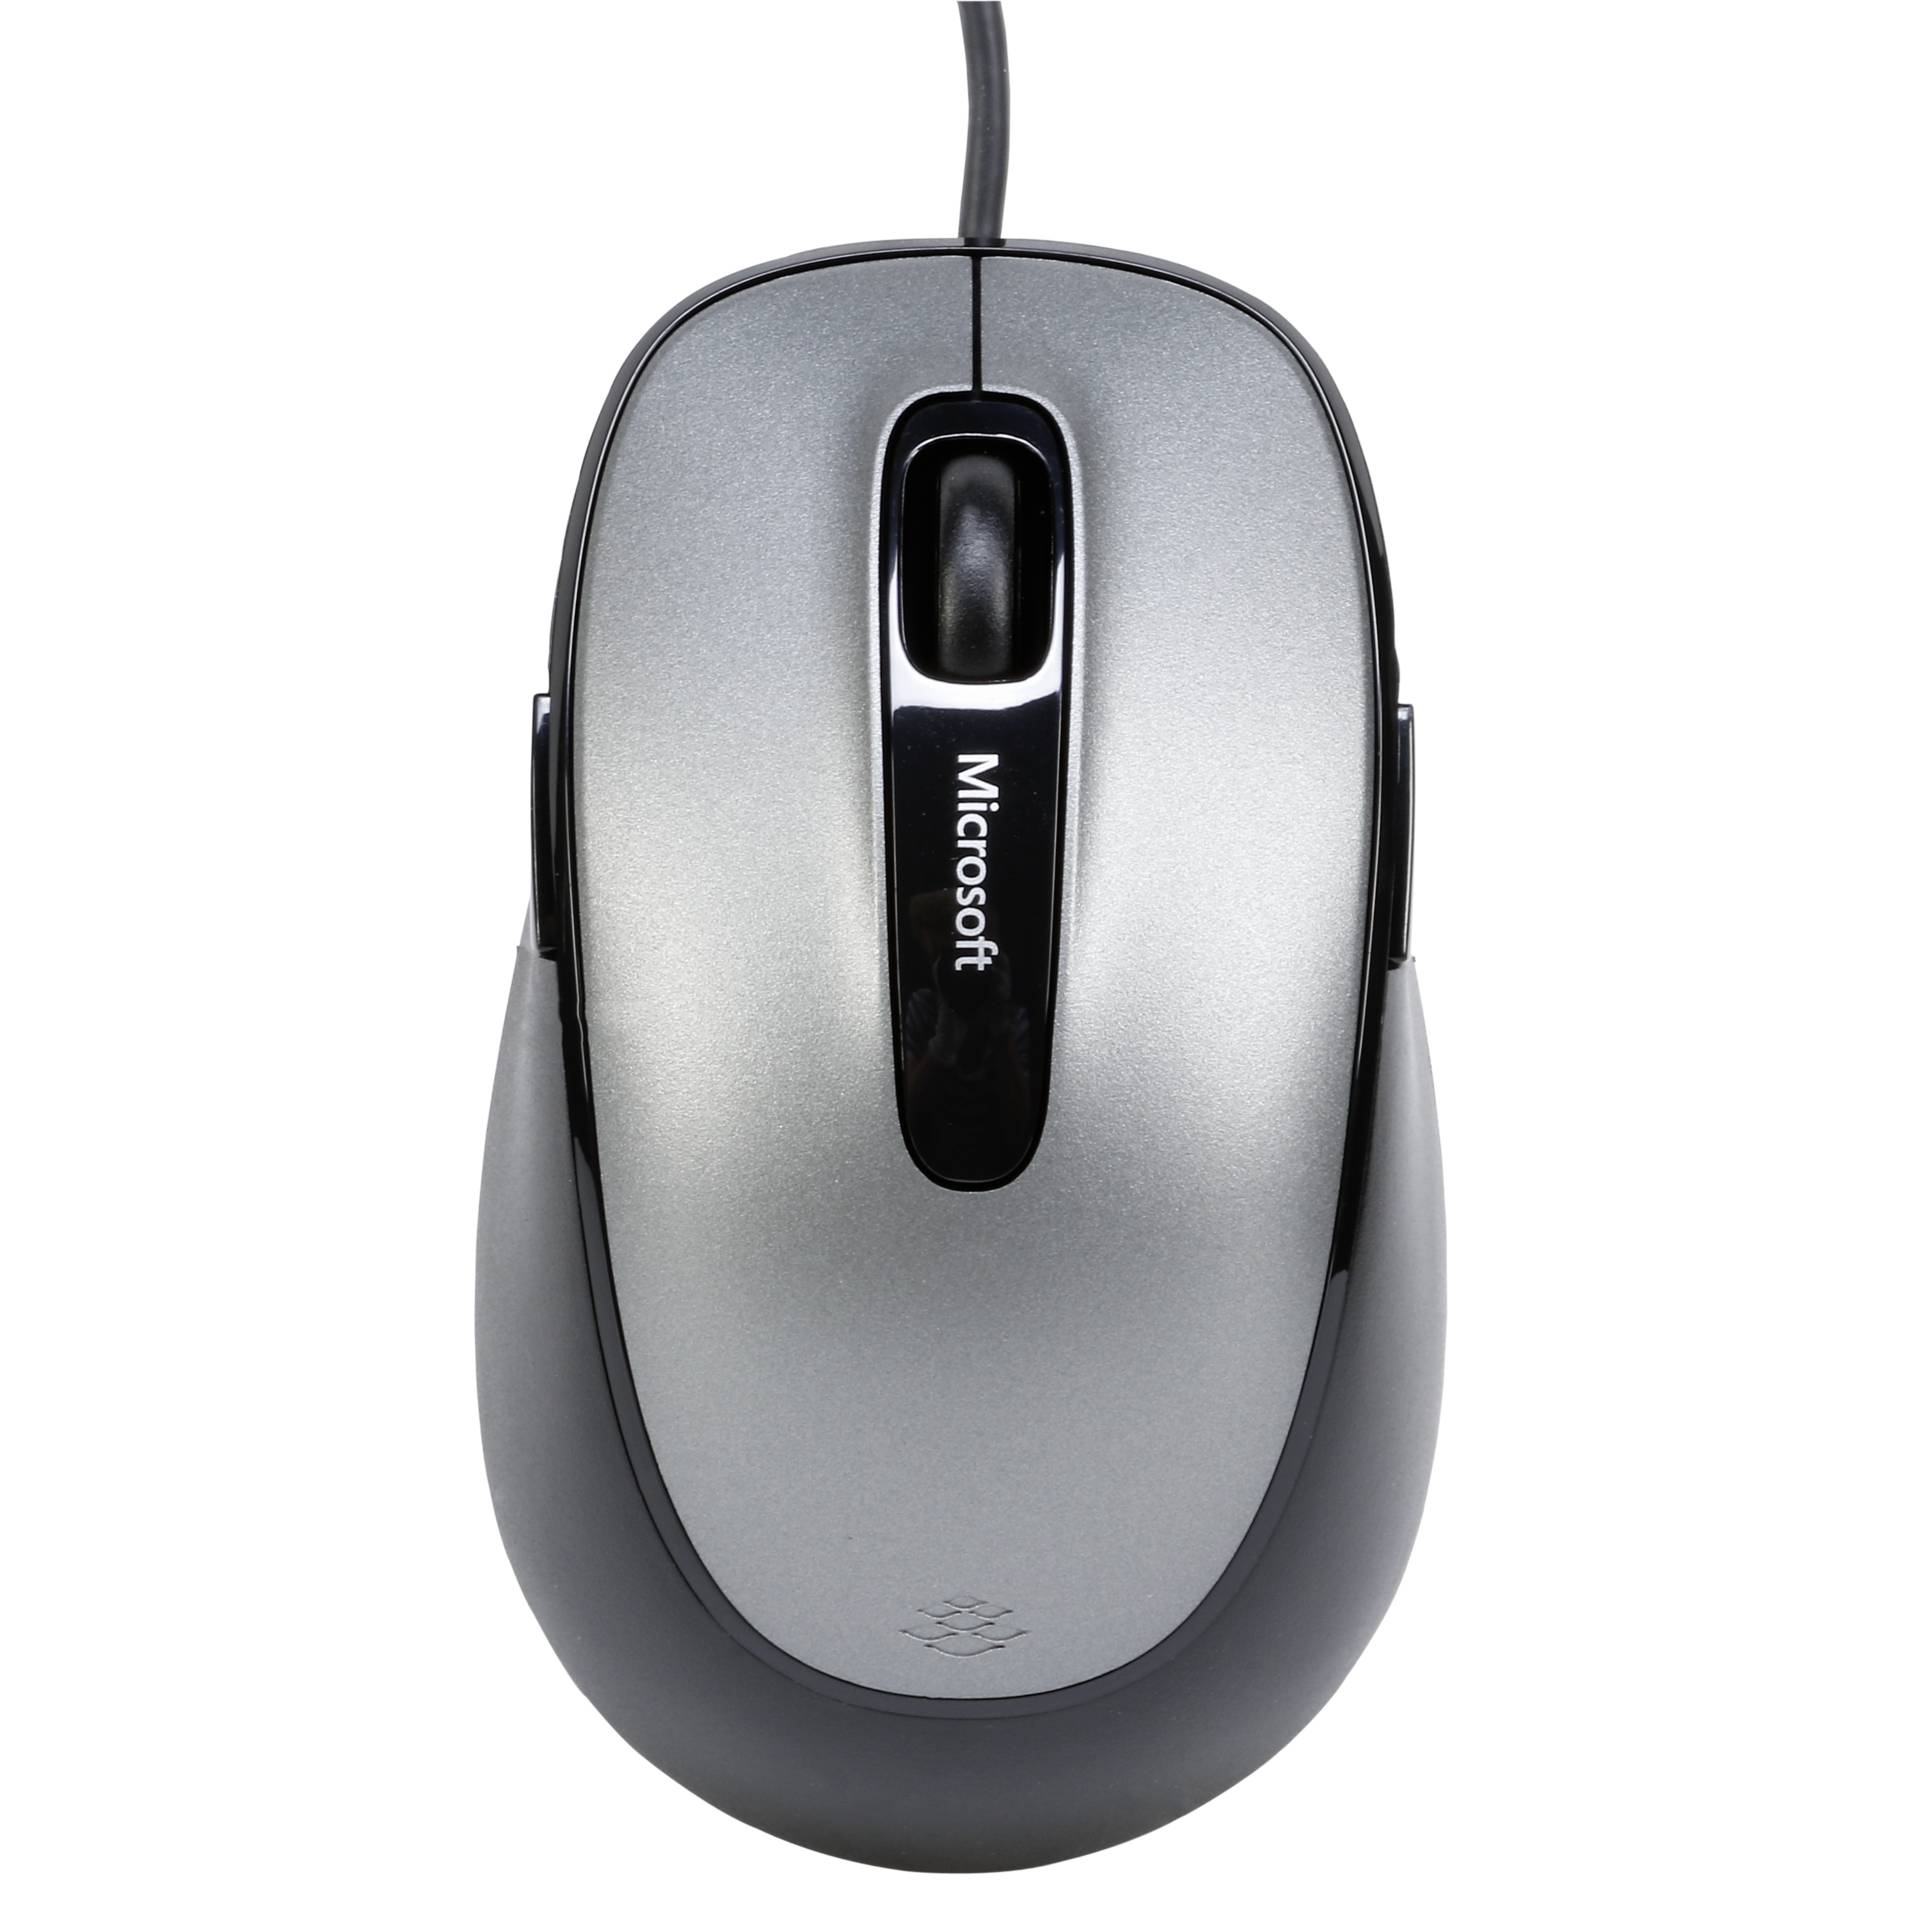 Microsoft Comfort Mouse 4500 Maus beidhändig günstig bei